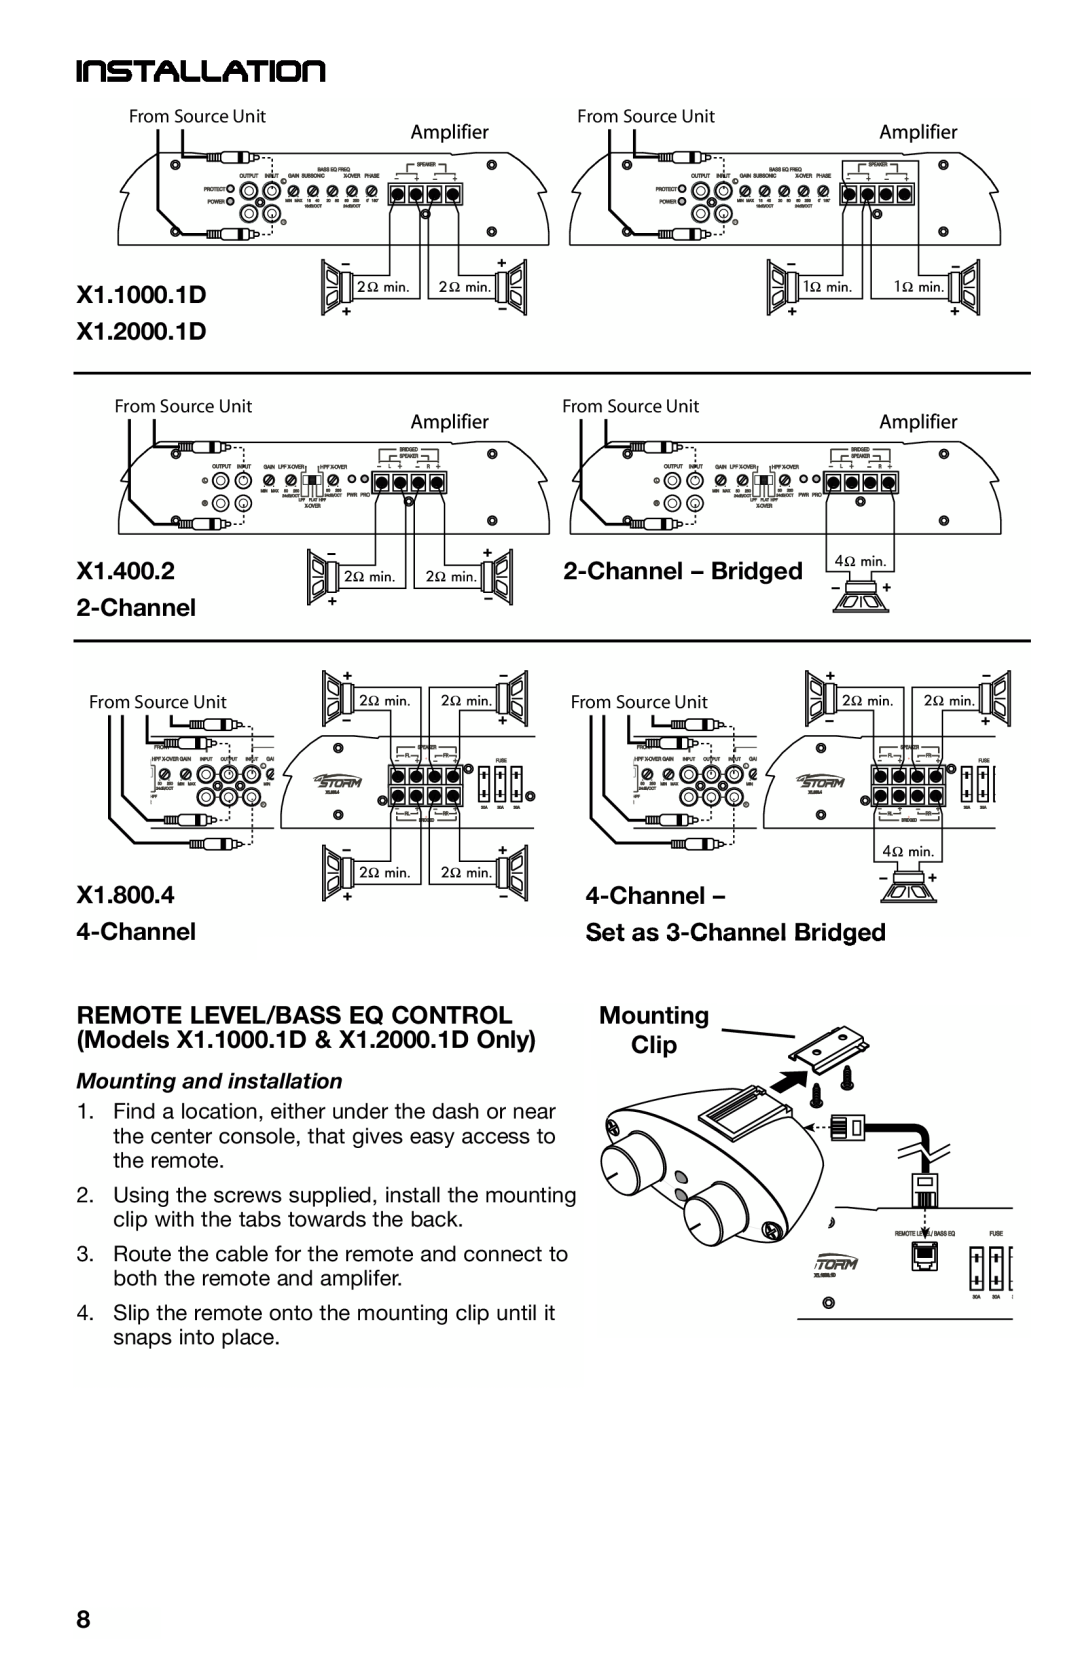 Lightning Audio manual Installation, X1.1000.1D X1.2000.1D, X1.400.2 2-Channel, Channel– Bridged, X1.800.4 4-Channel 